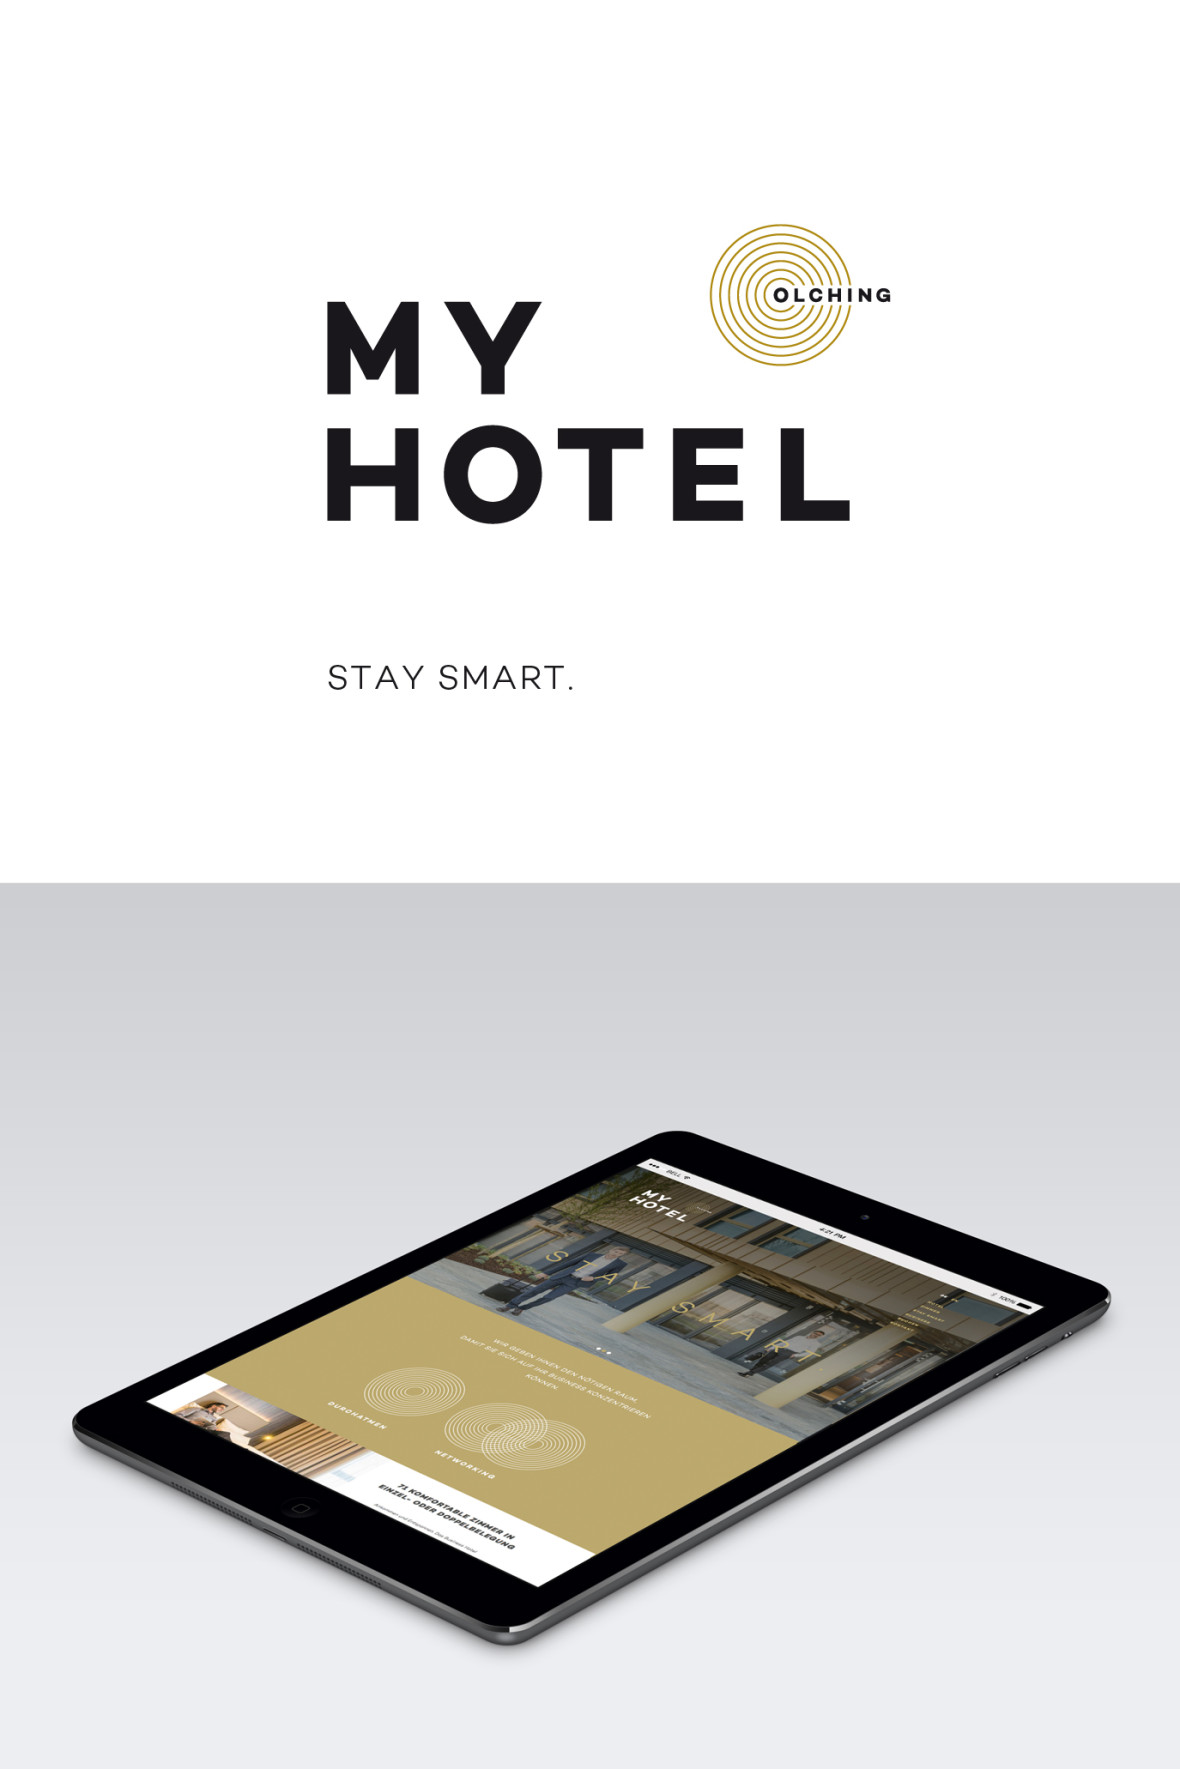 Myhotel – Stay Smart ()